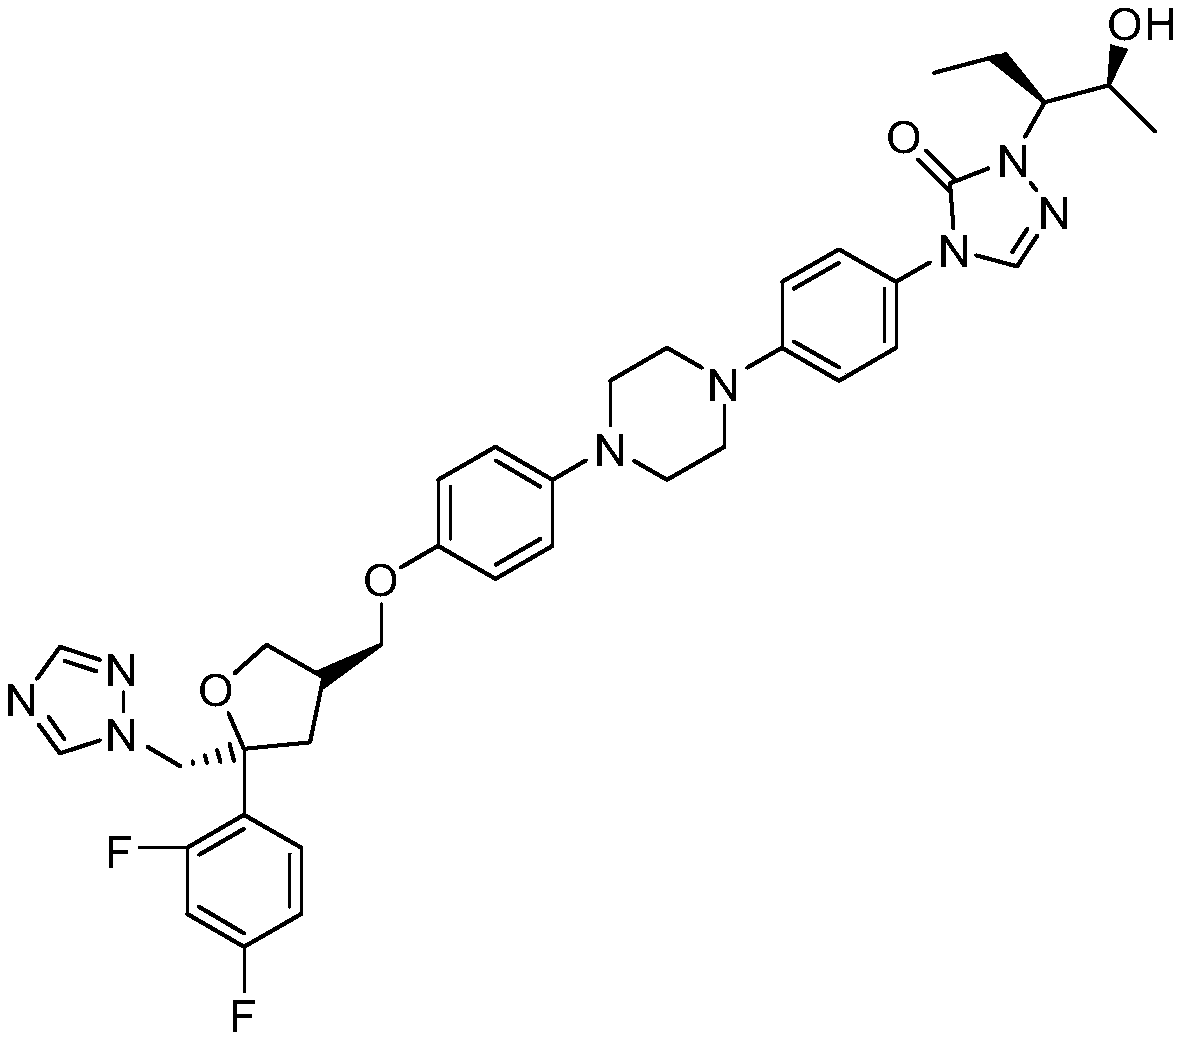 Method for Synthesizing (s)-n'-(2-benzyloxypropylene)formylhydrazide